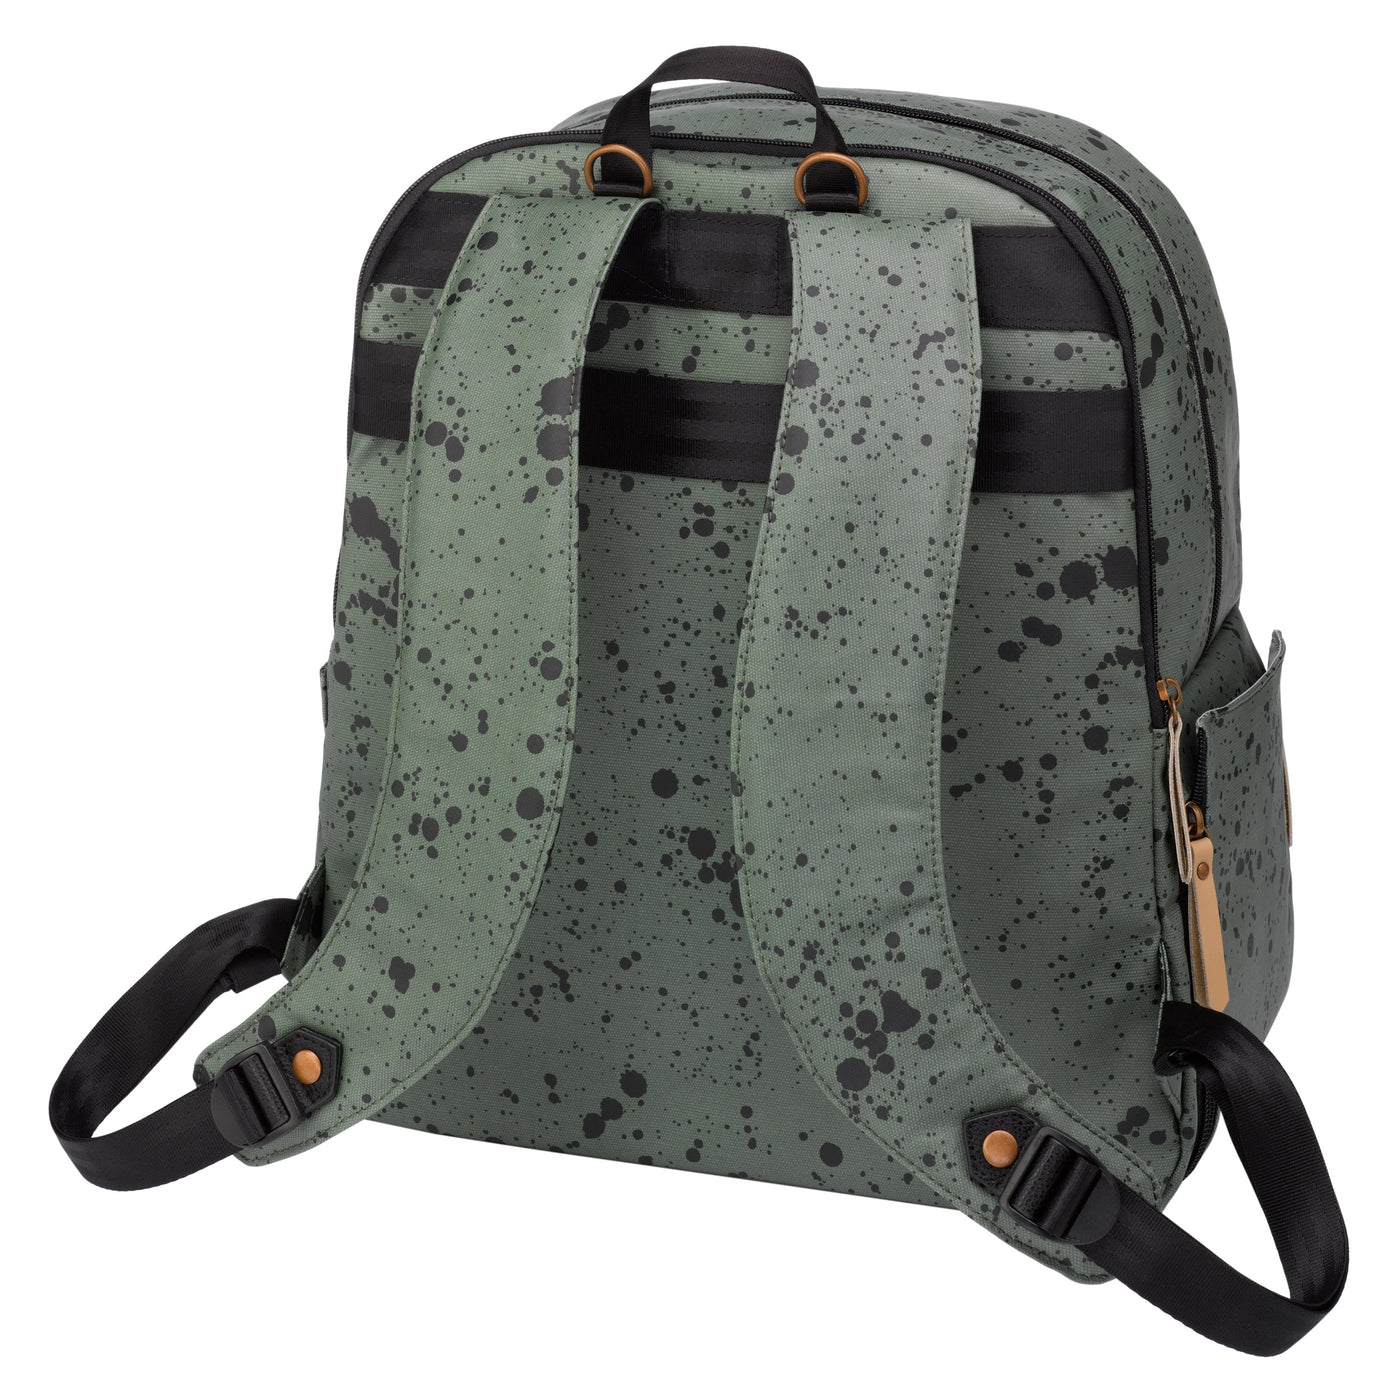 2-in-1 Provisions Backpack Nursery Bag - Olive Ink Blot